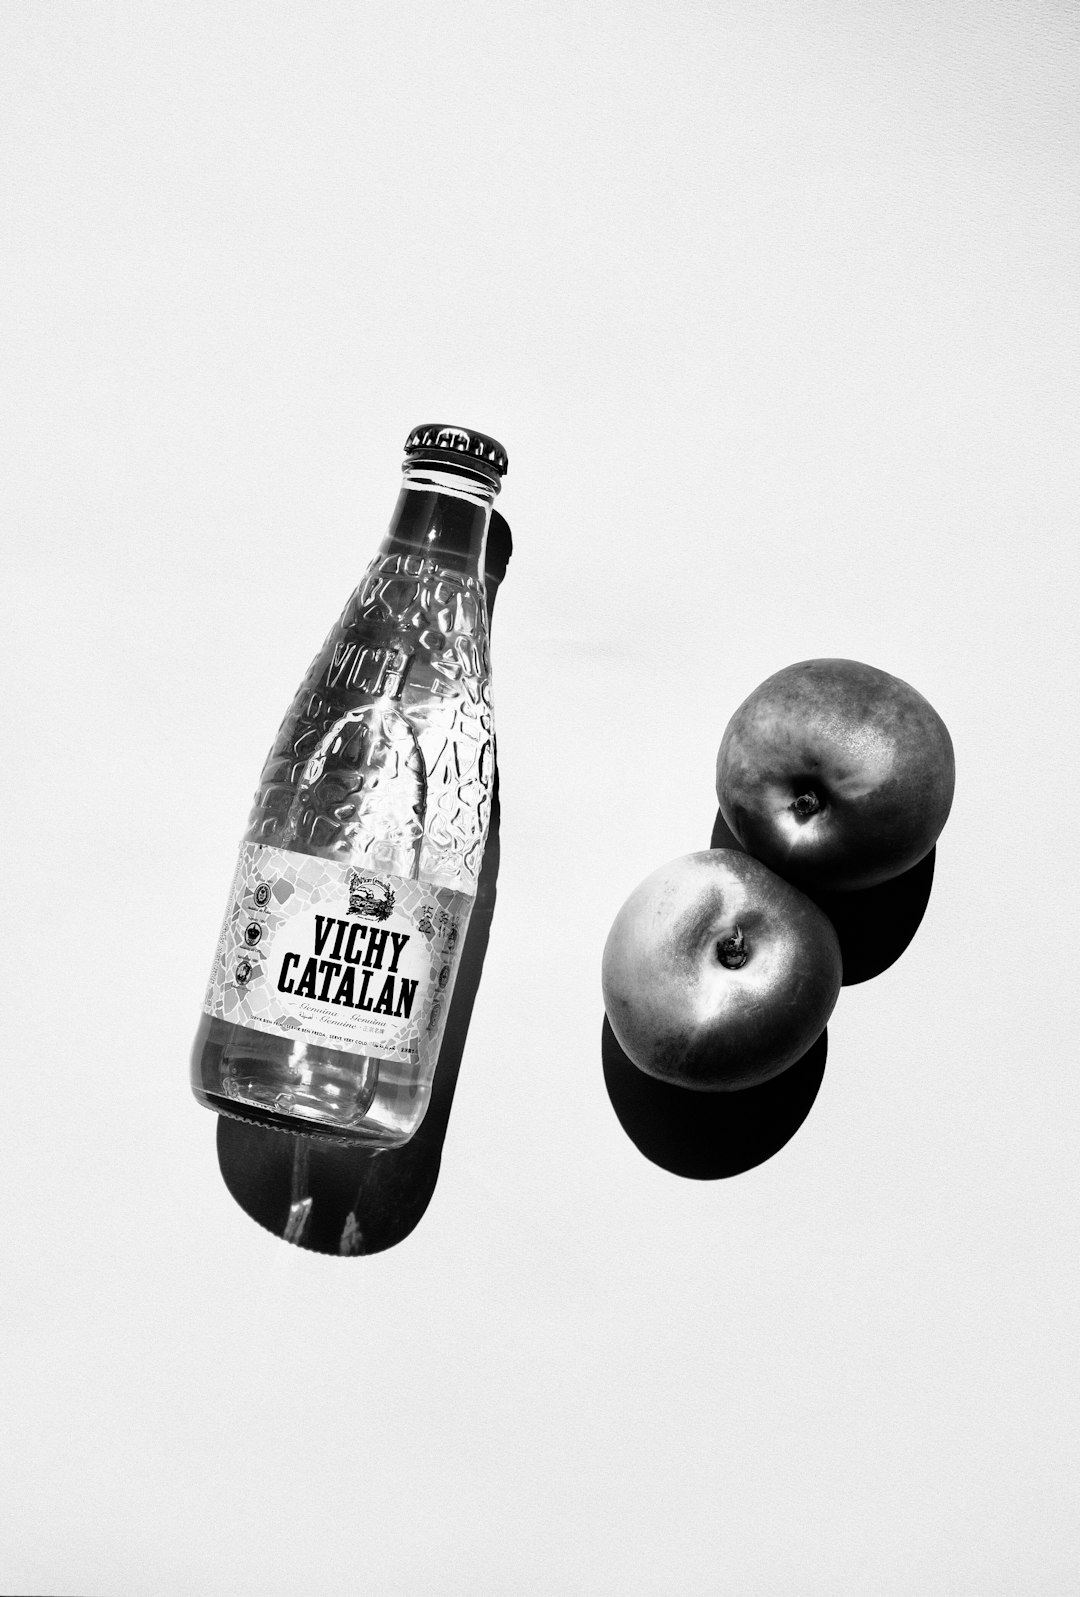 grayscale photo of green apple beside clear glass bottle